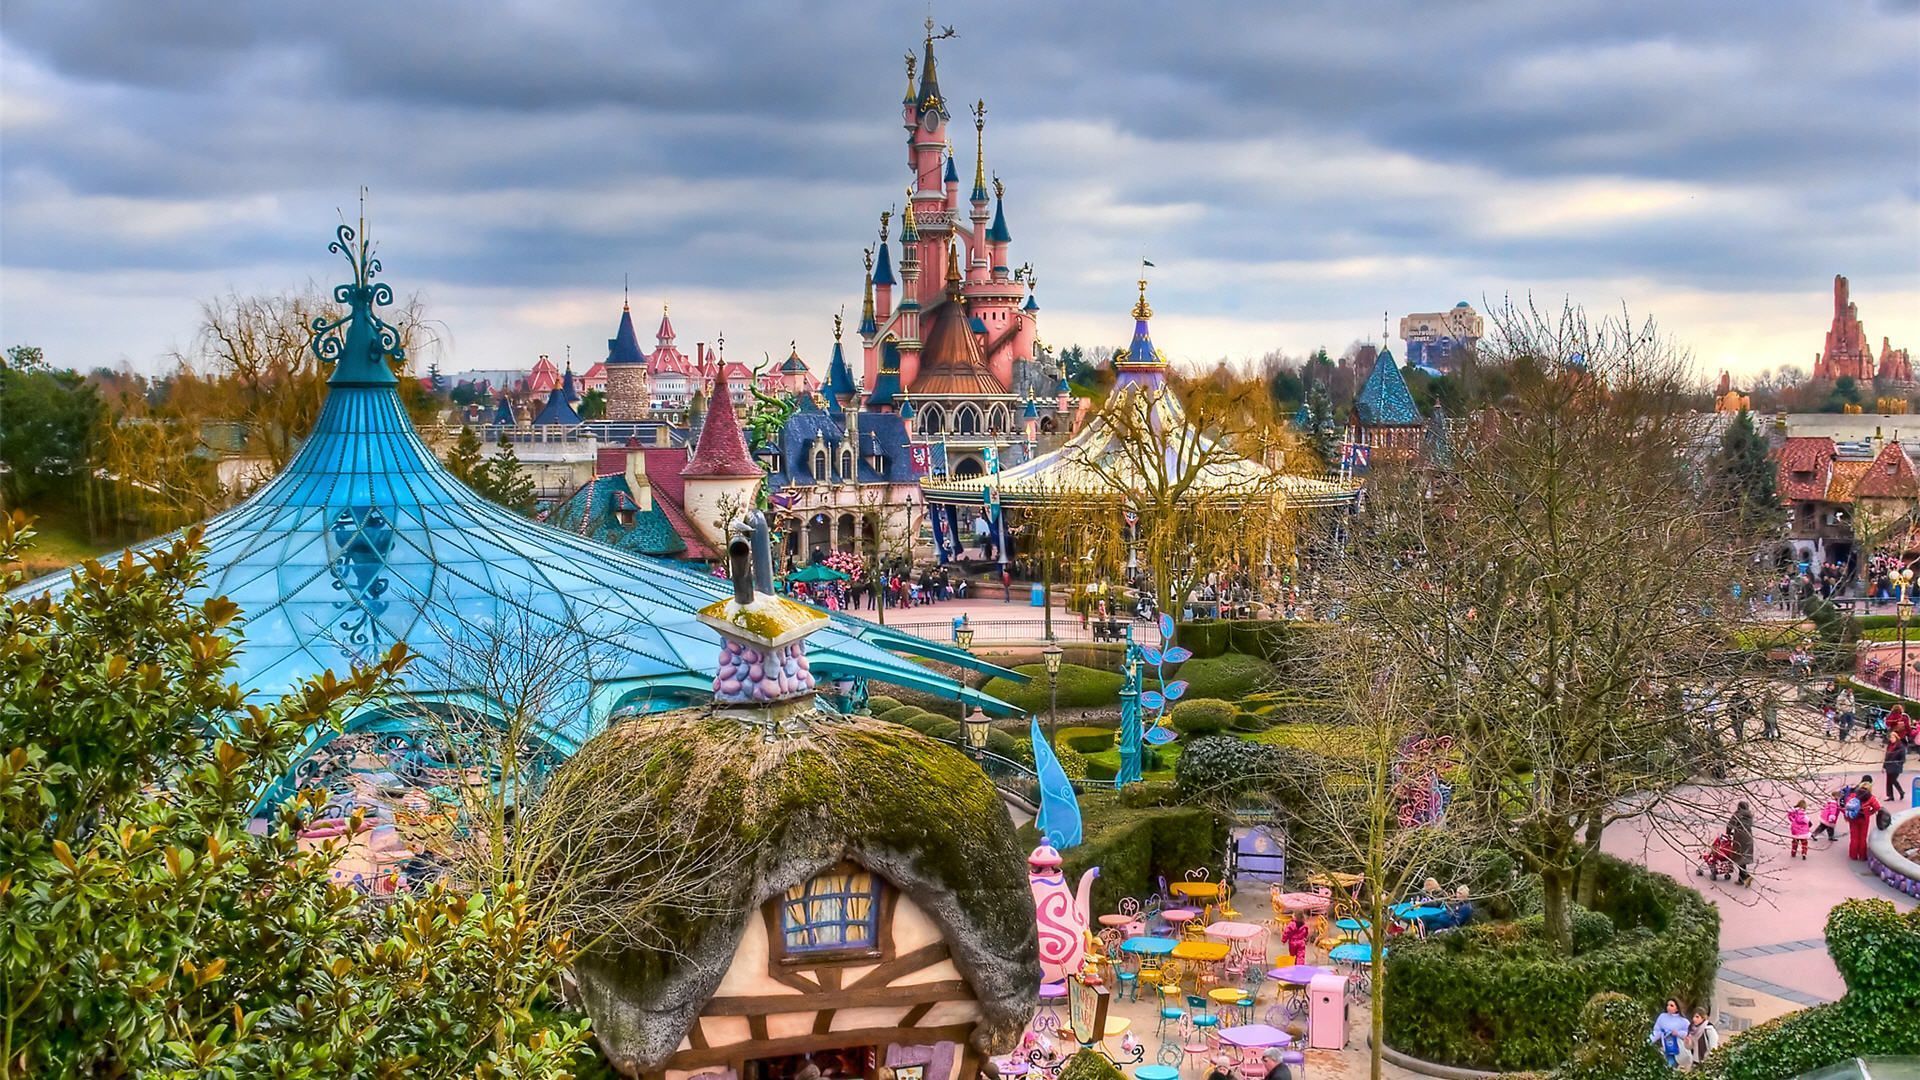 A view of the disneyland theme park - Disneyland